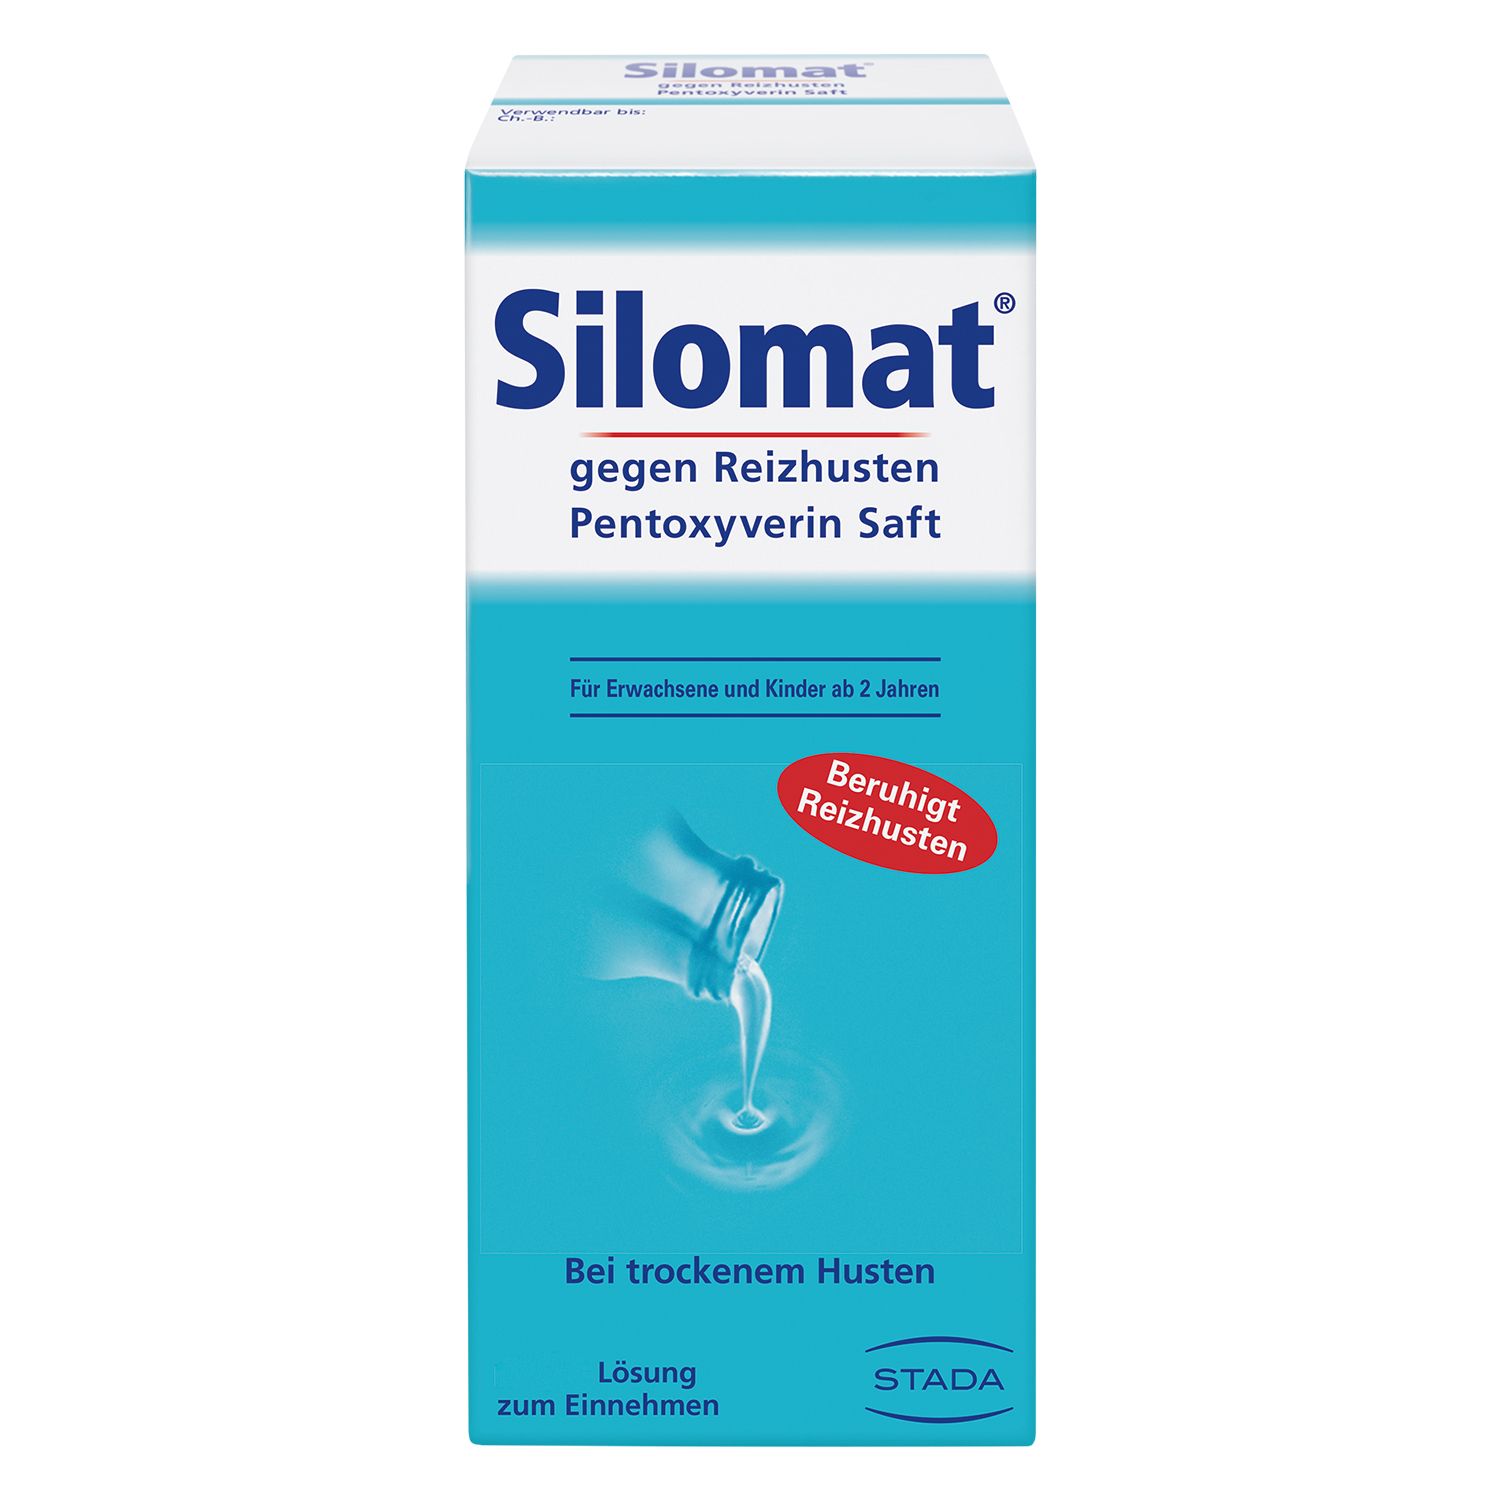 Silomat® gegen Reizhusten Pentoxyverin